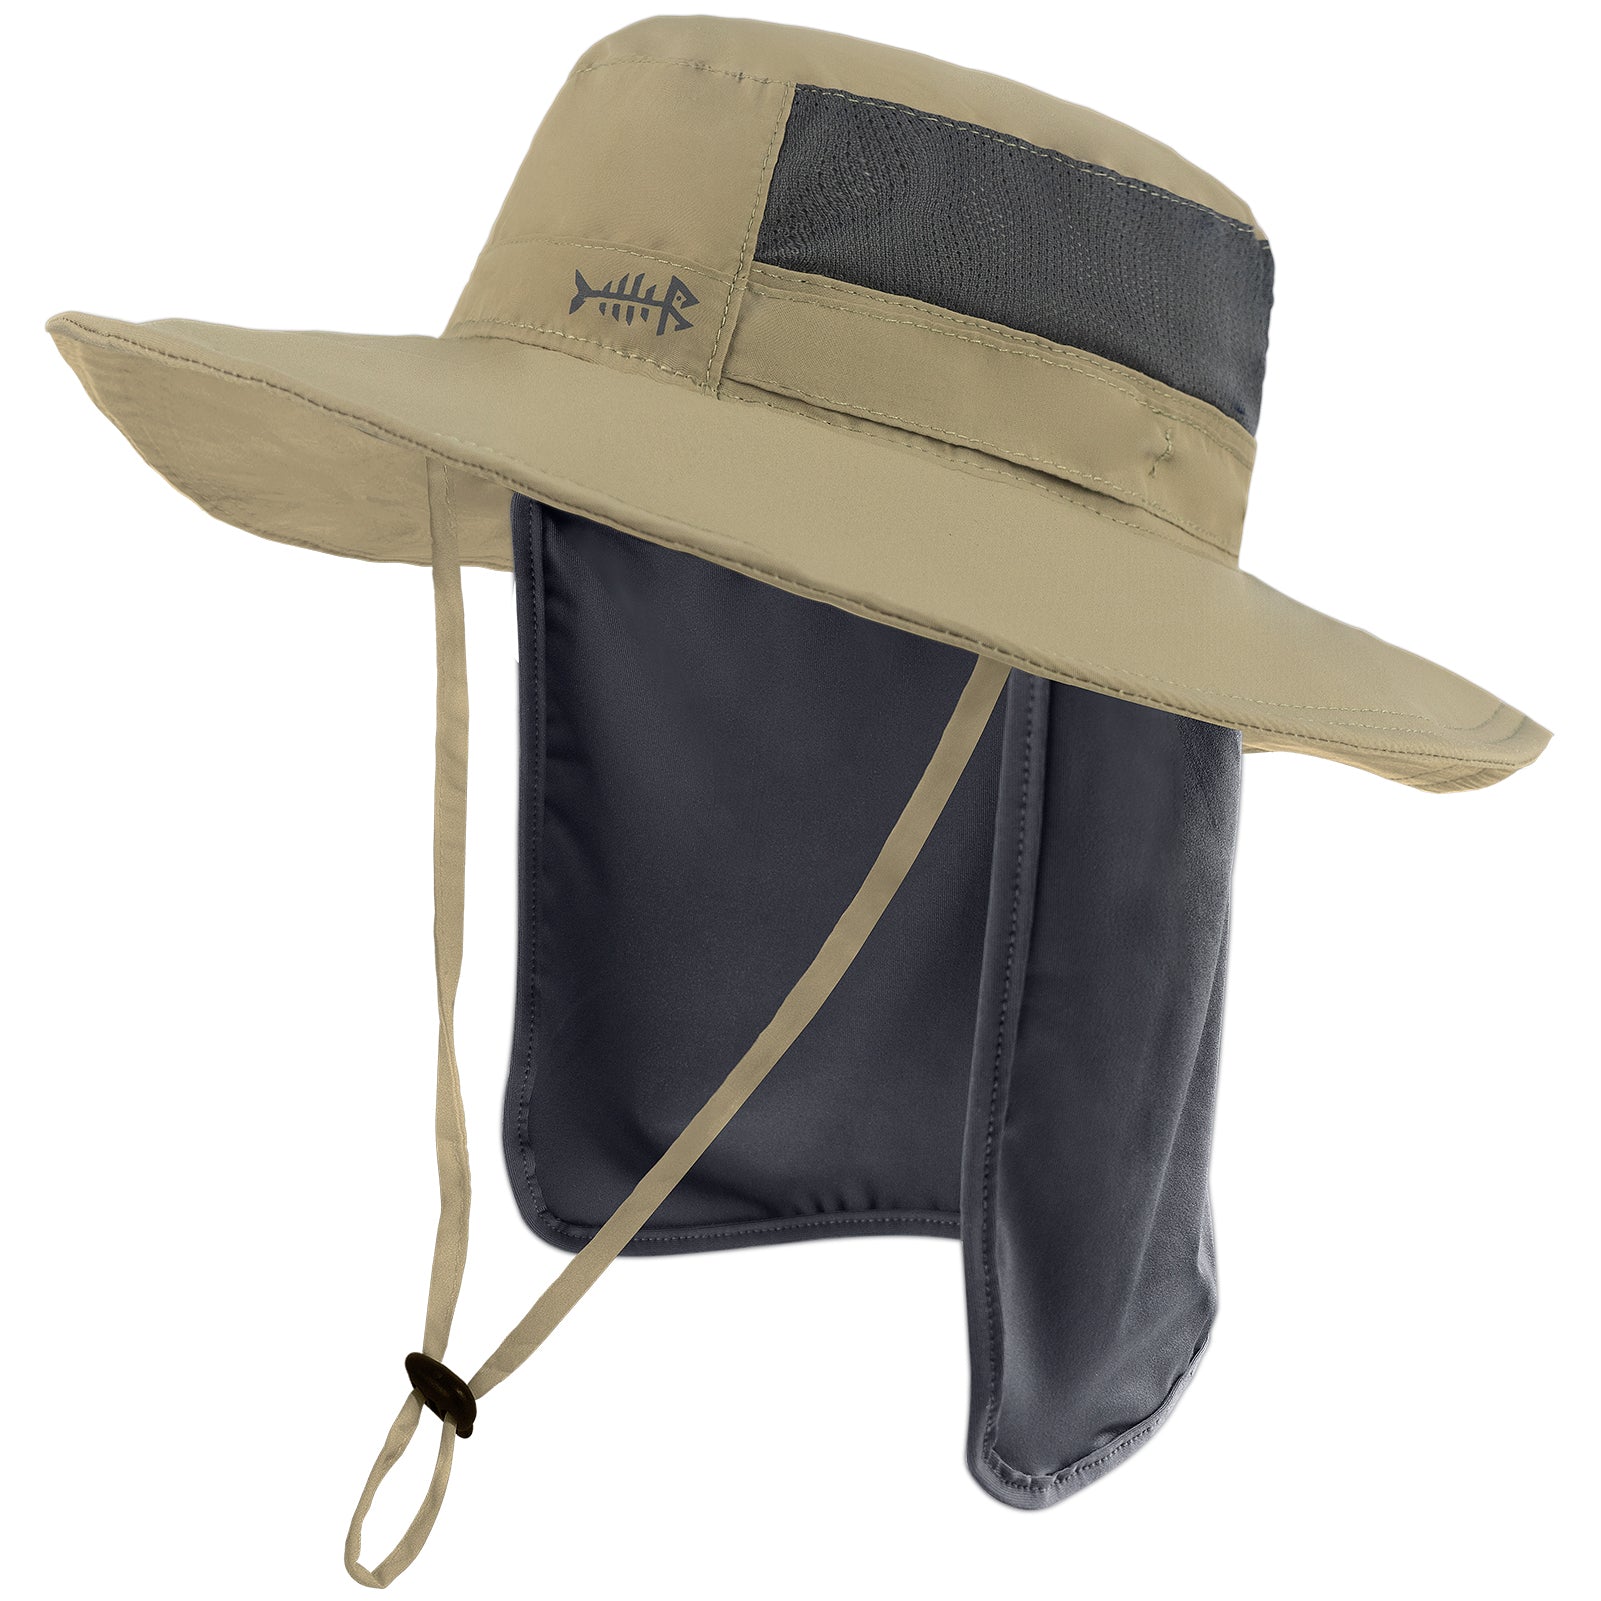 BASSDASH UPF50+ Fishing Bucket Hat for Men Women Lightweight Water  Resistant Packable Outdoor Summer Sun Hats FH13